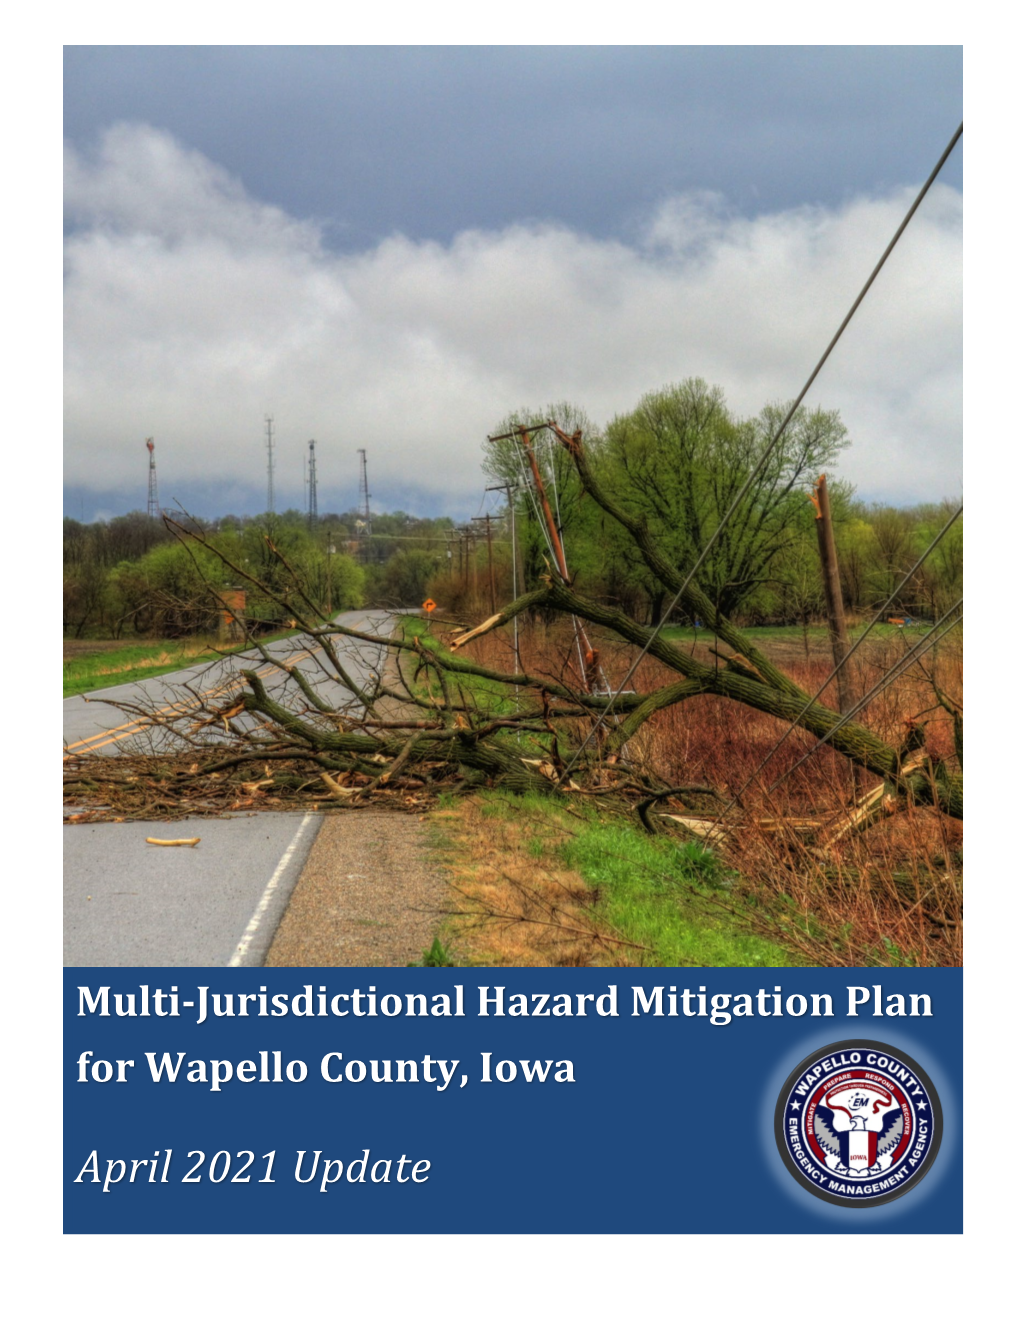 Ulti-Jurisdictionhazard Mitigation Plan for Mahaska County, Iowa 2015